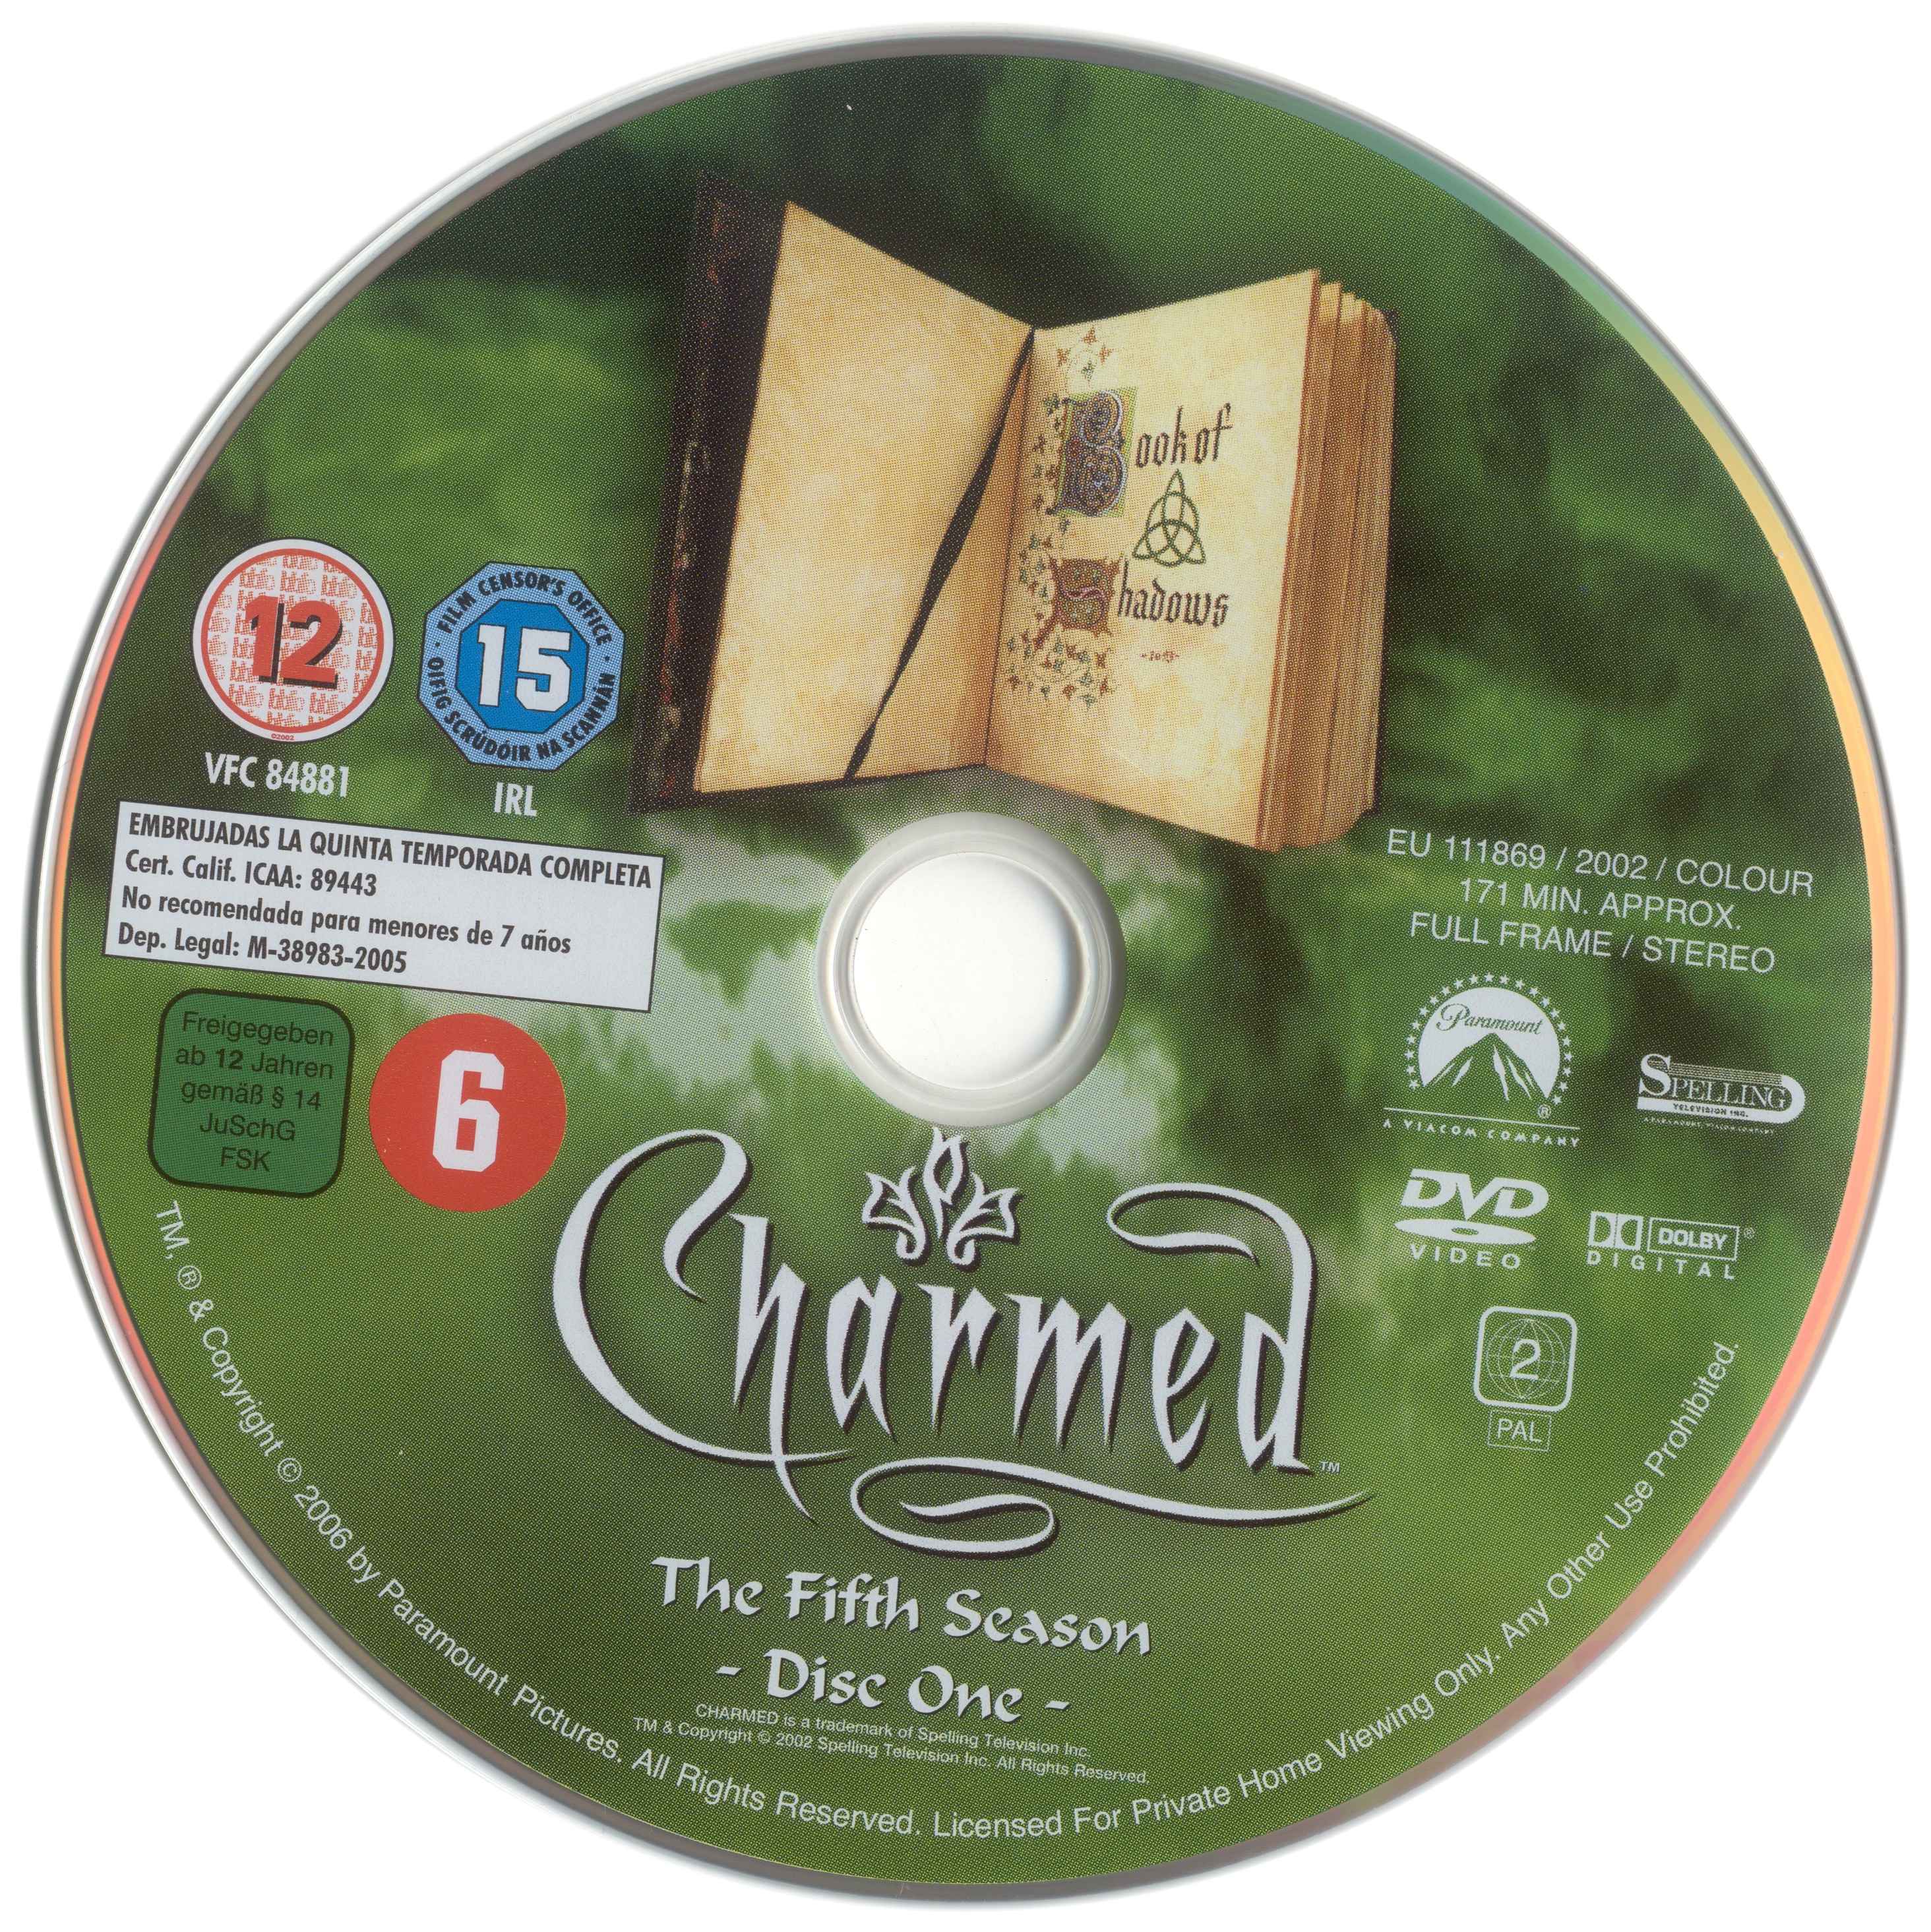 Charmed Saison 5 dvd 1